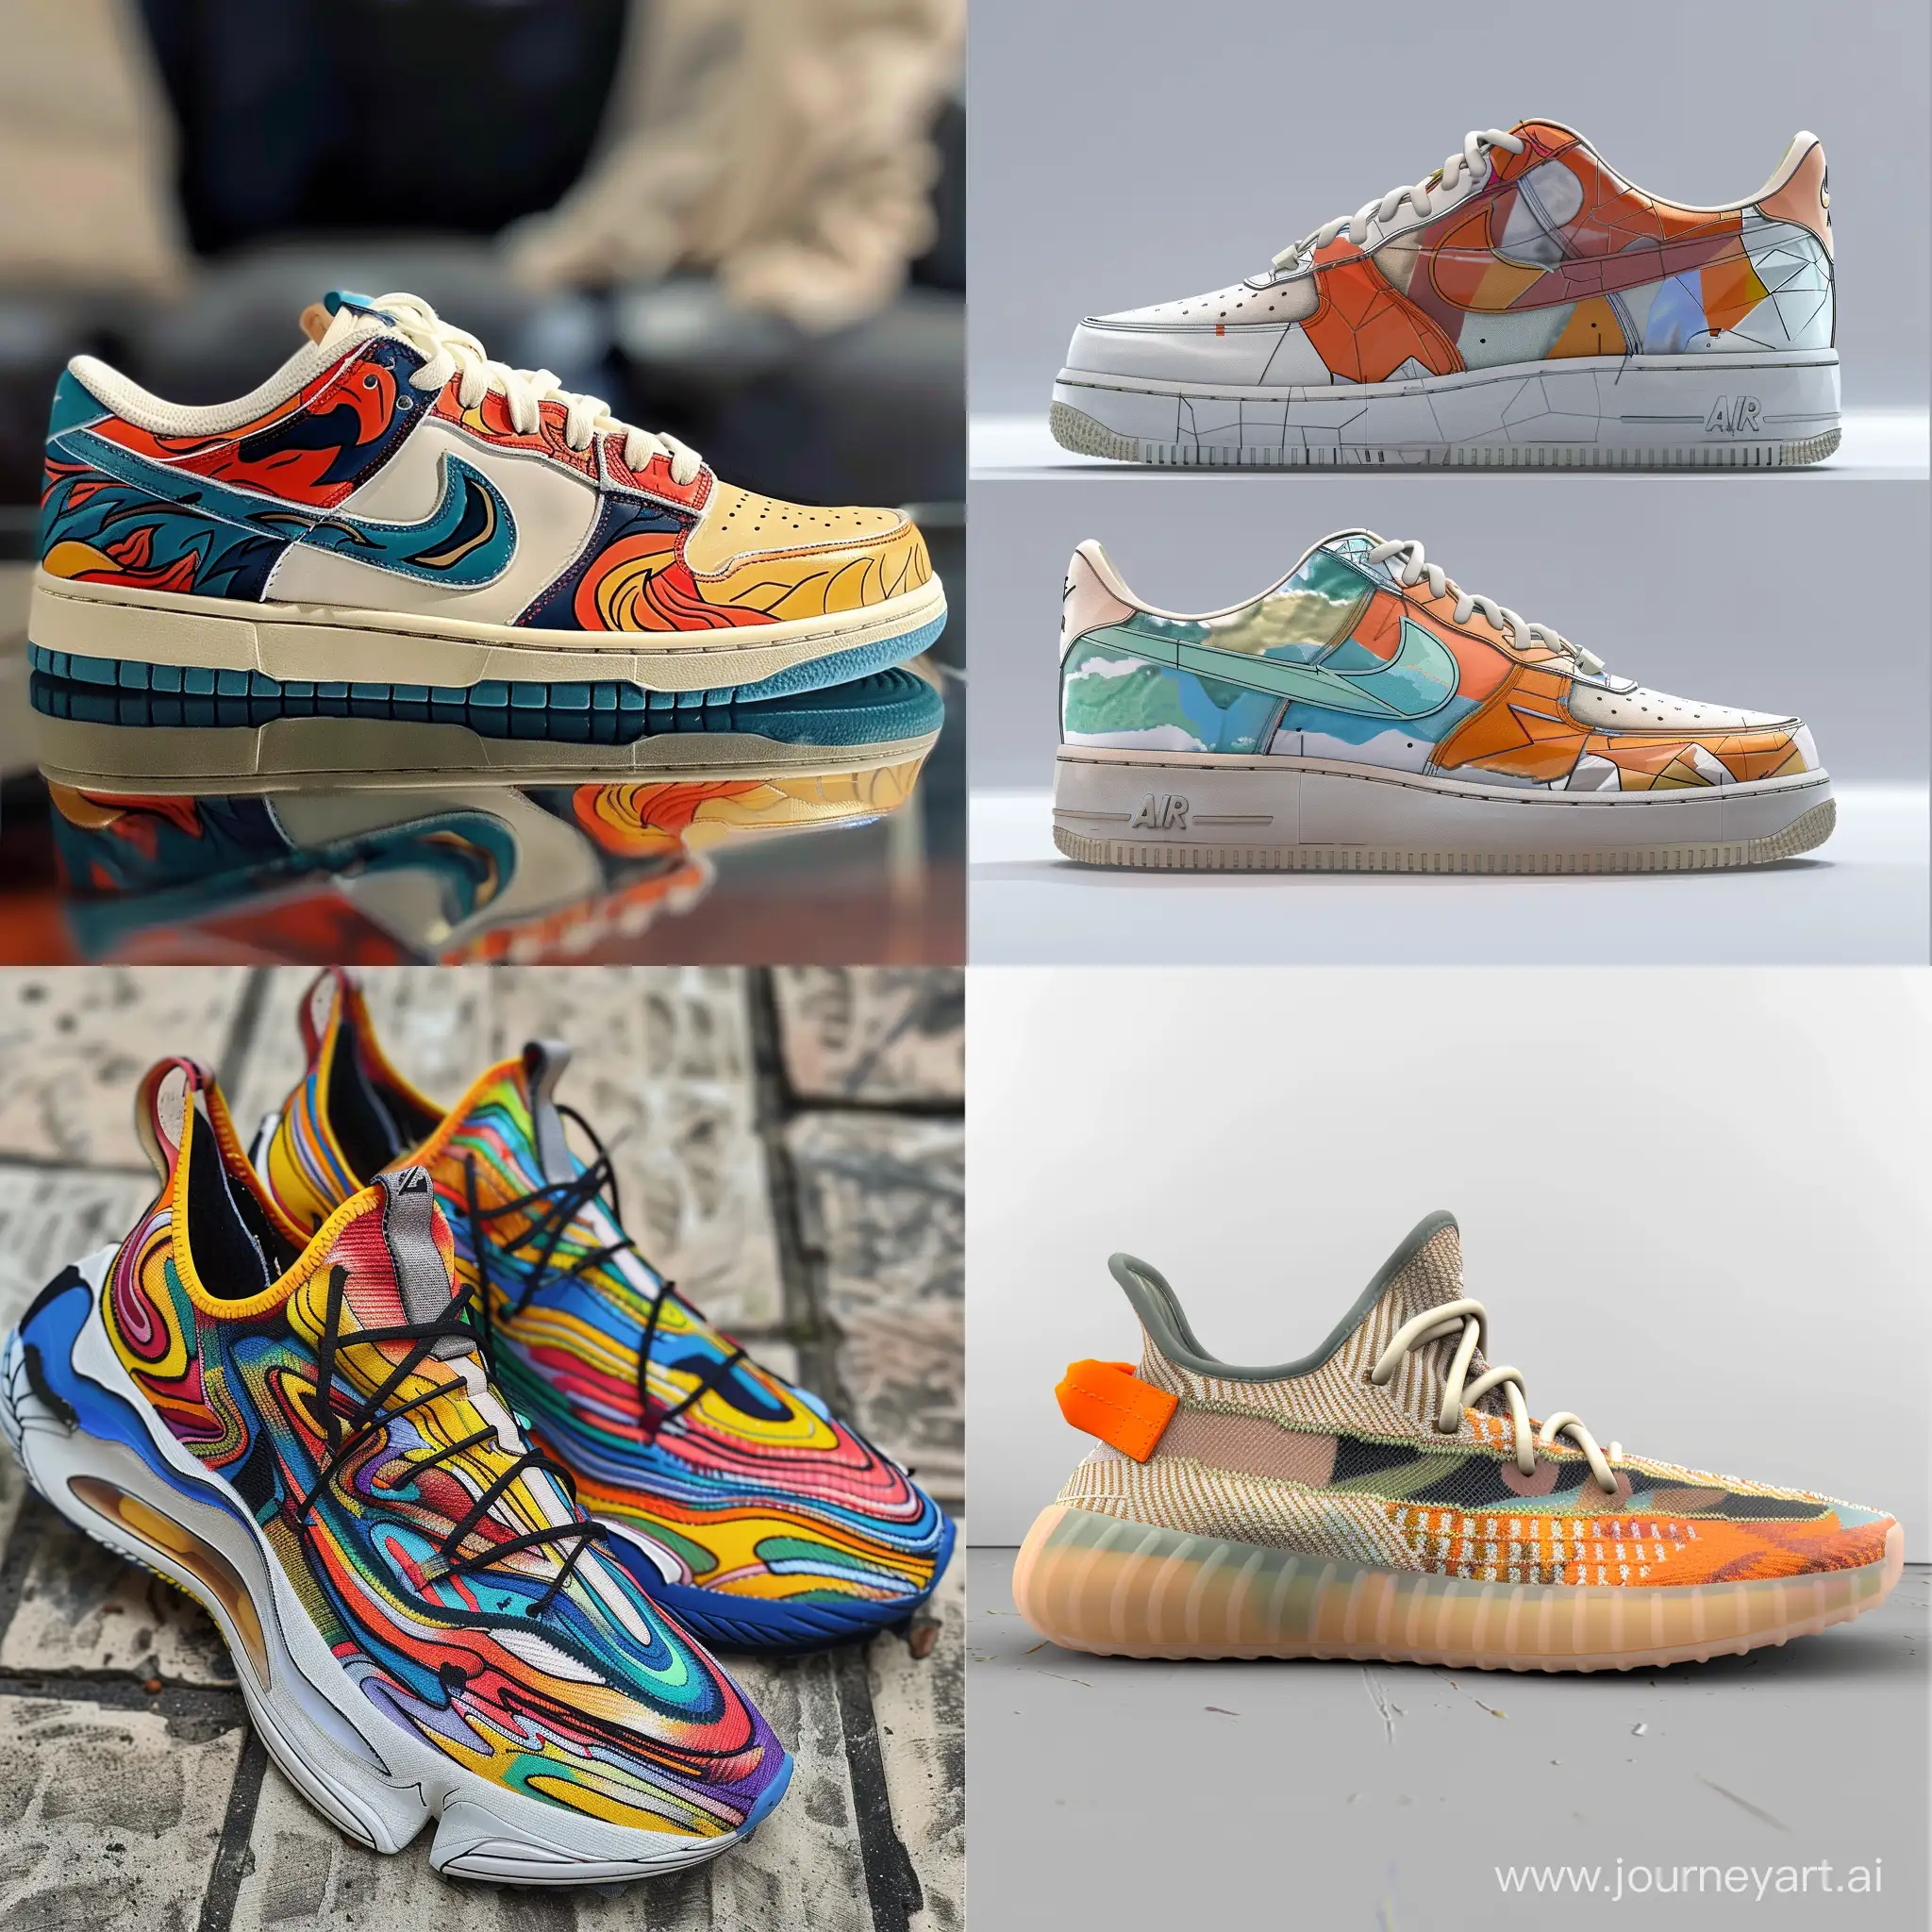 Future-Sneaker-Design-Concept-Visionary-AR-Sneakers